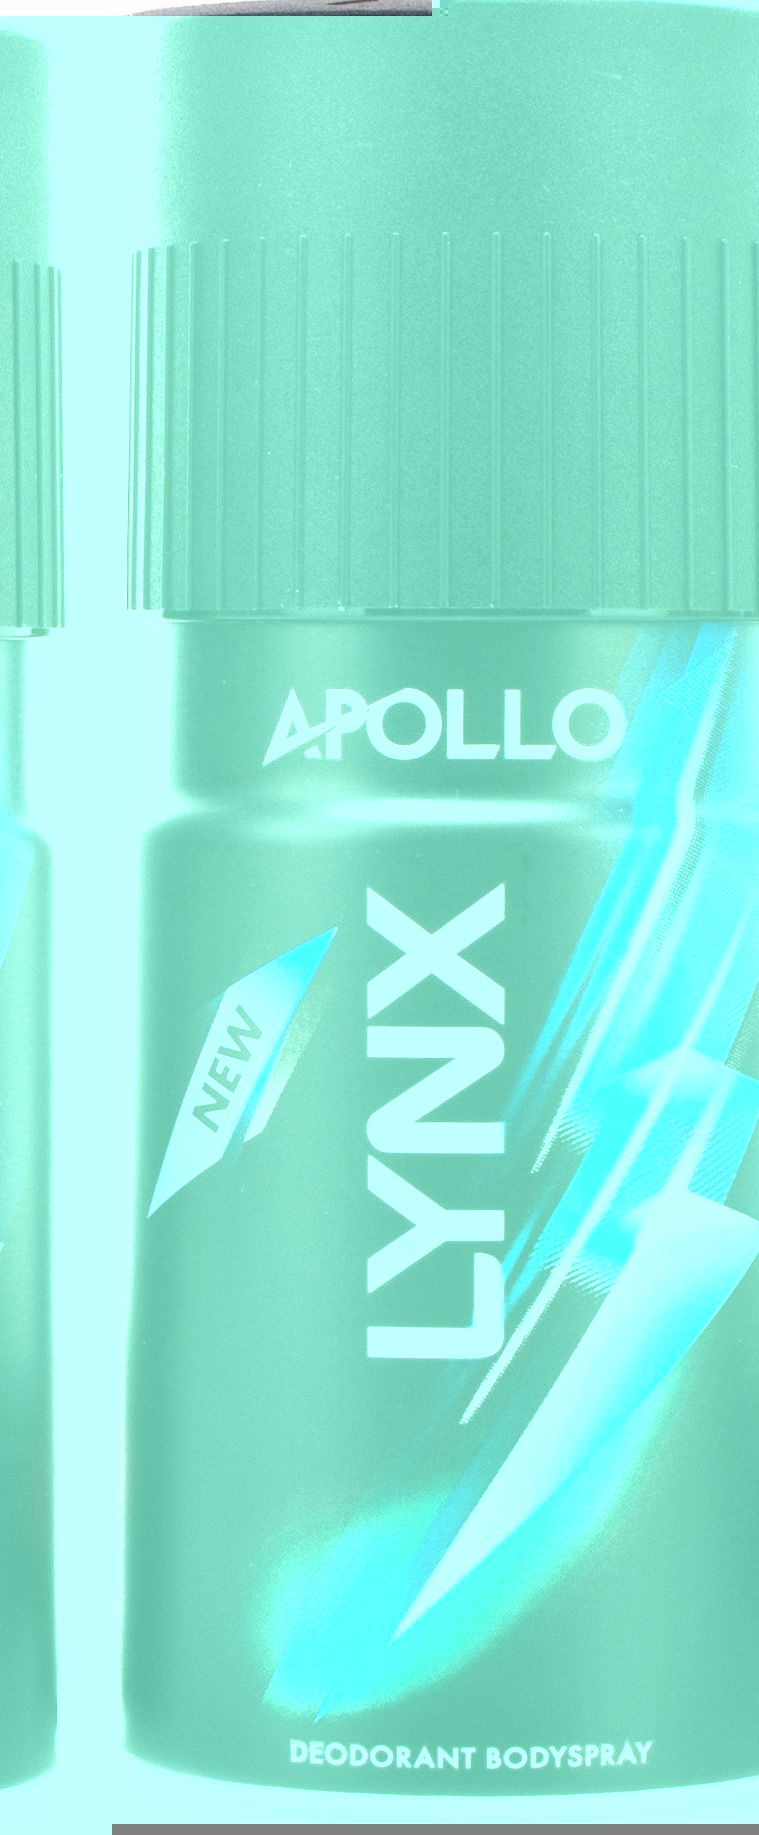 Apollo Deodorant Bodyspray